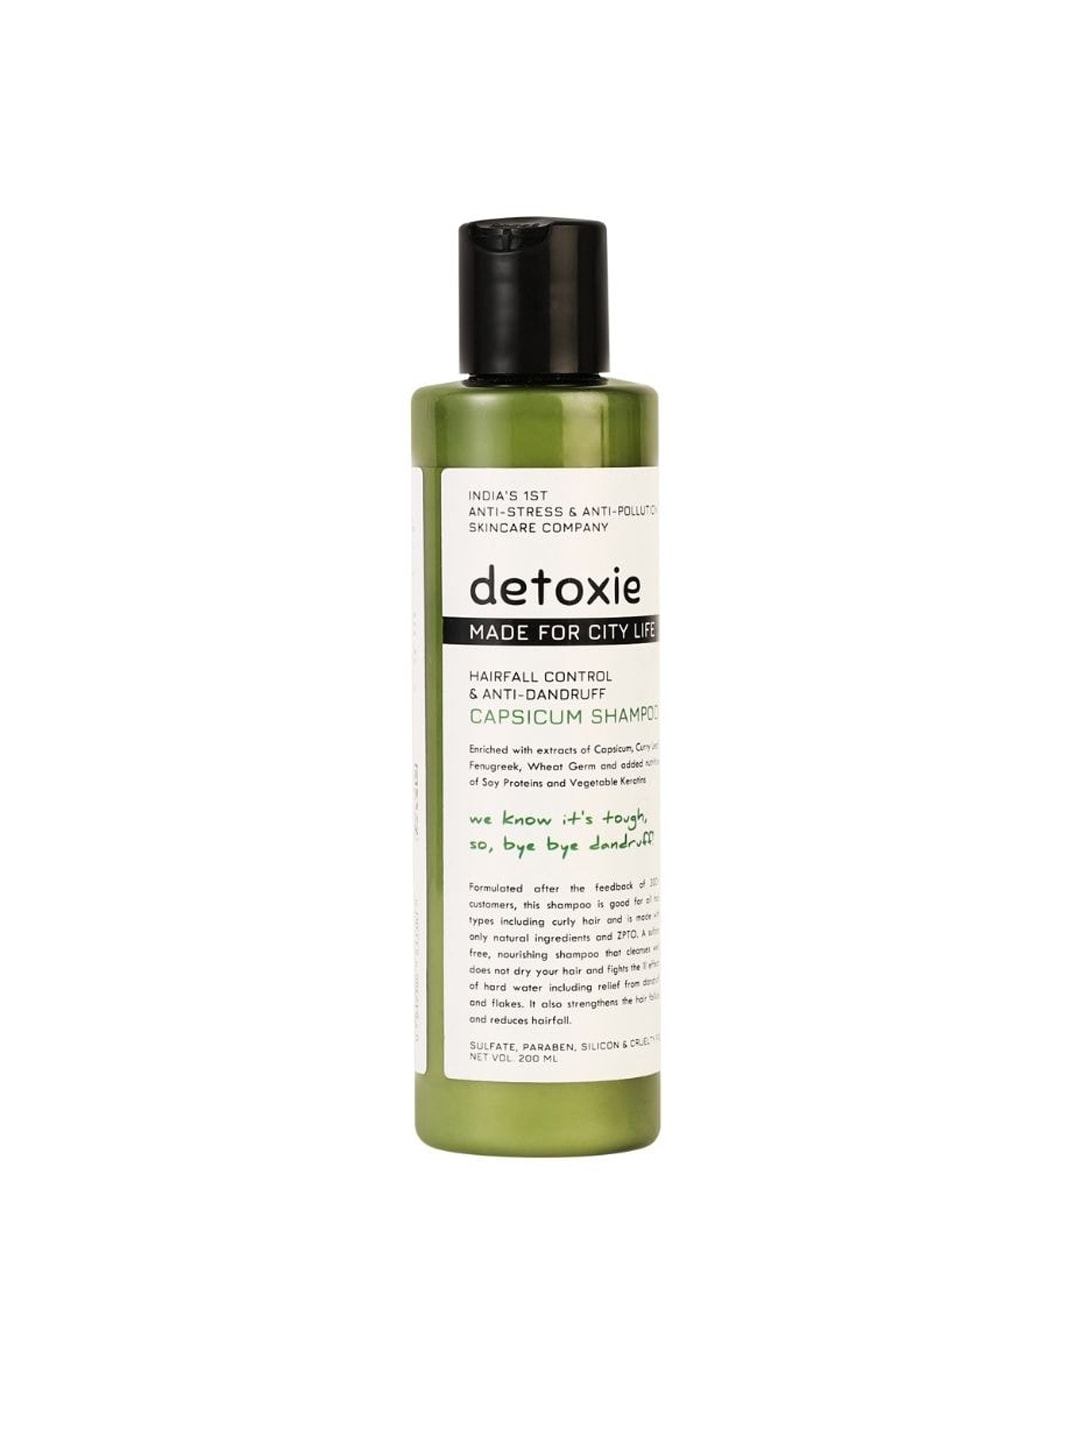 Detoxie Anti-Dandruff & Flake Relief Capsicum Shampoo - 200 ml Price in India